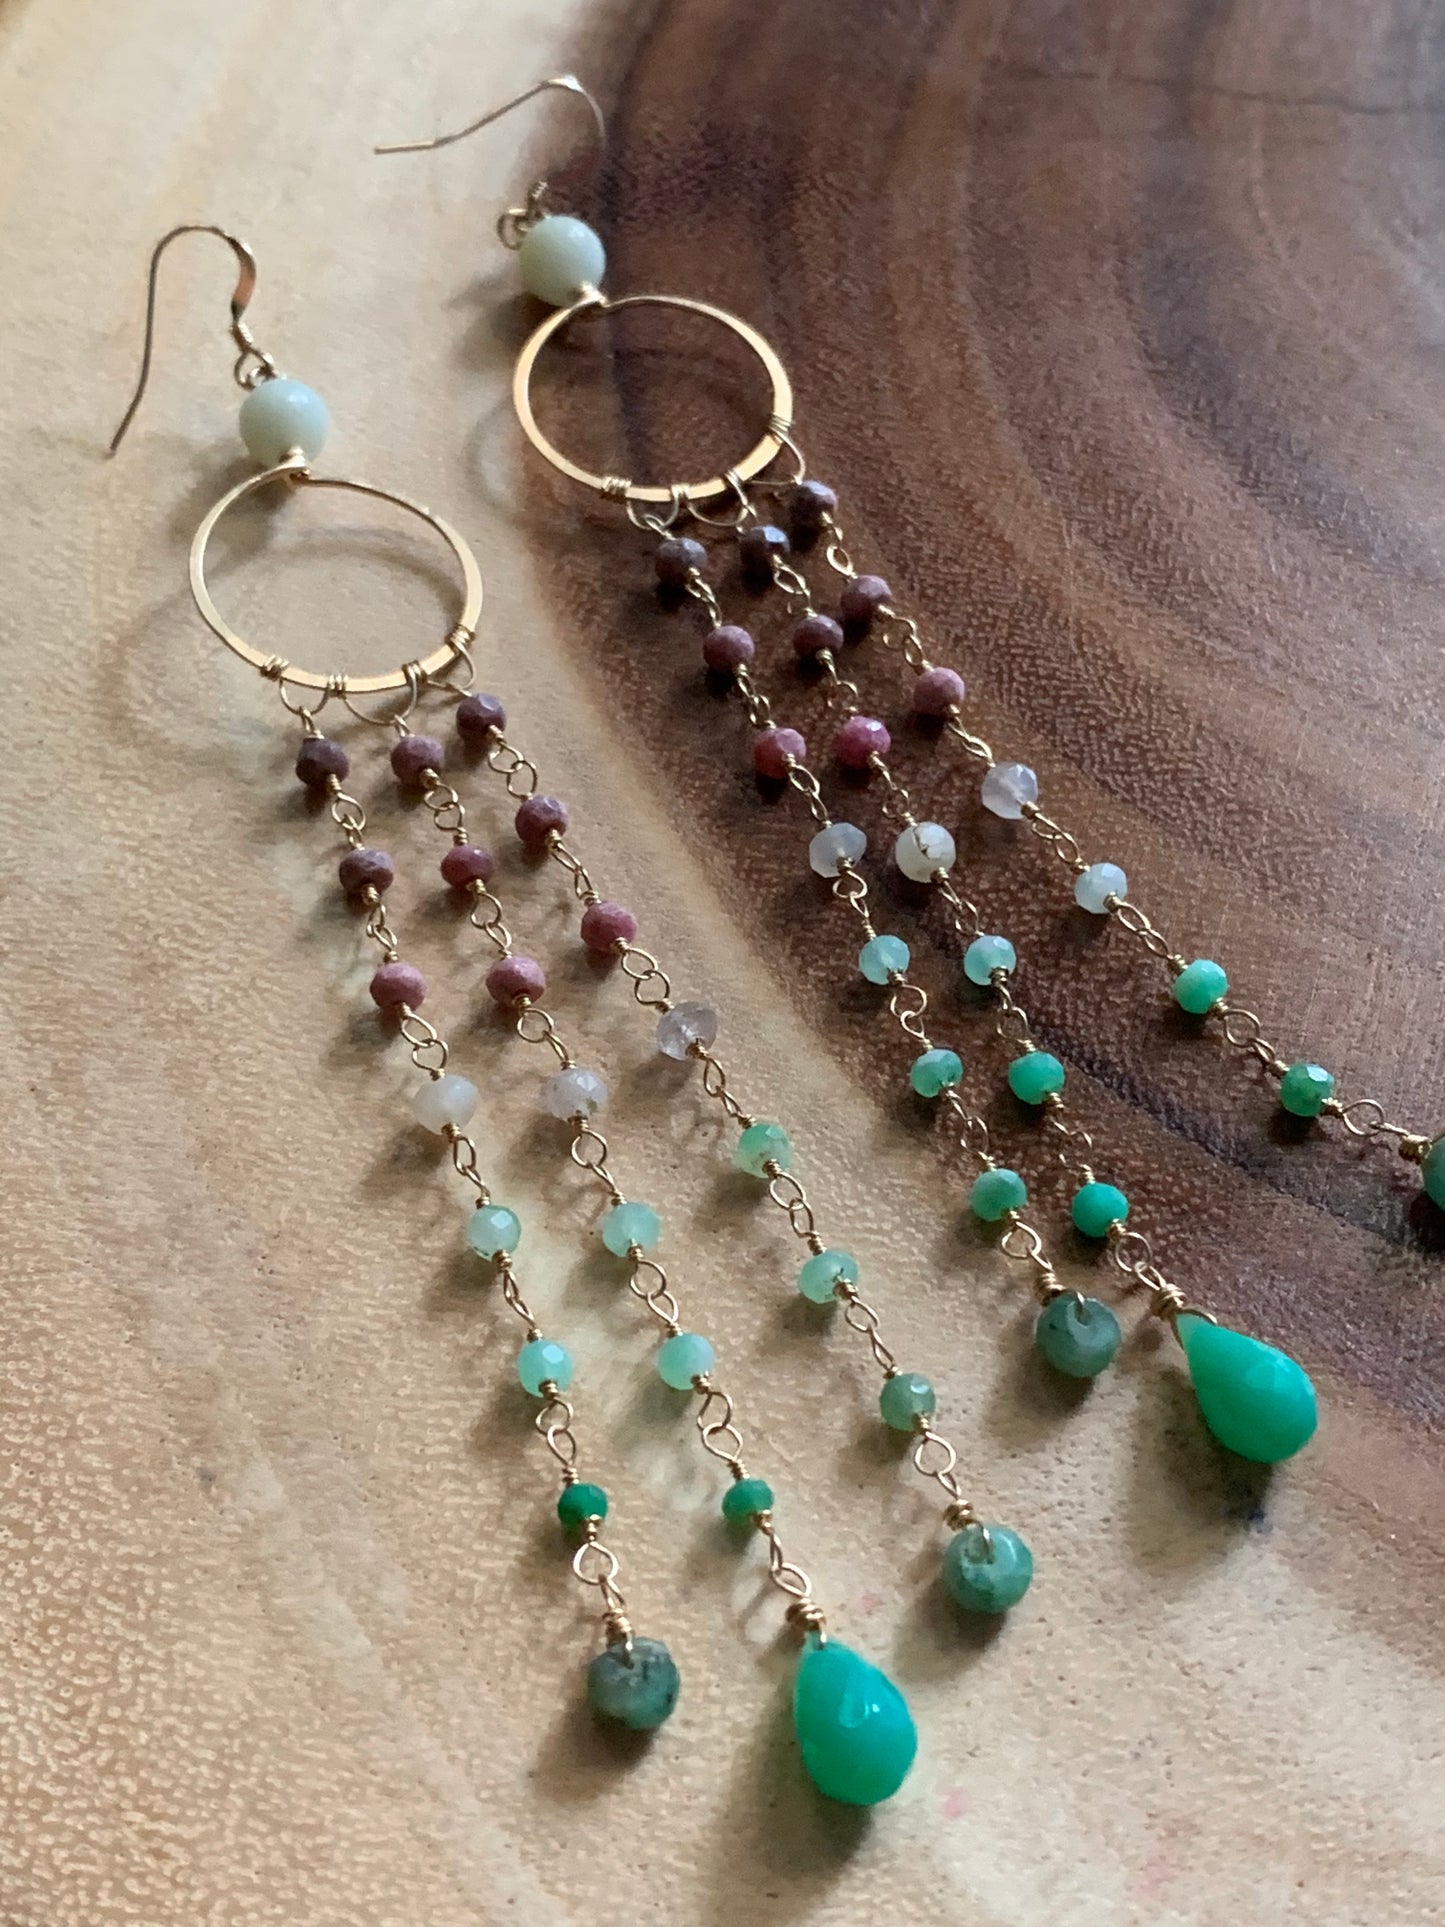 Goldfilled Earrings, Rhondonite, Chrysoprase, Emeralds, and Amazonite